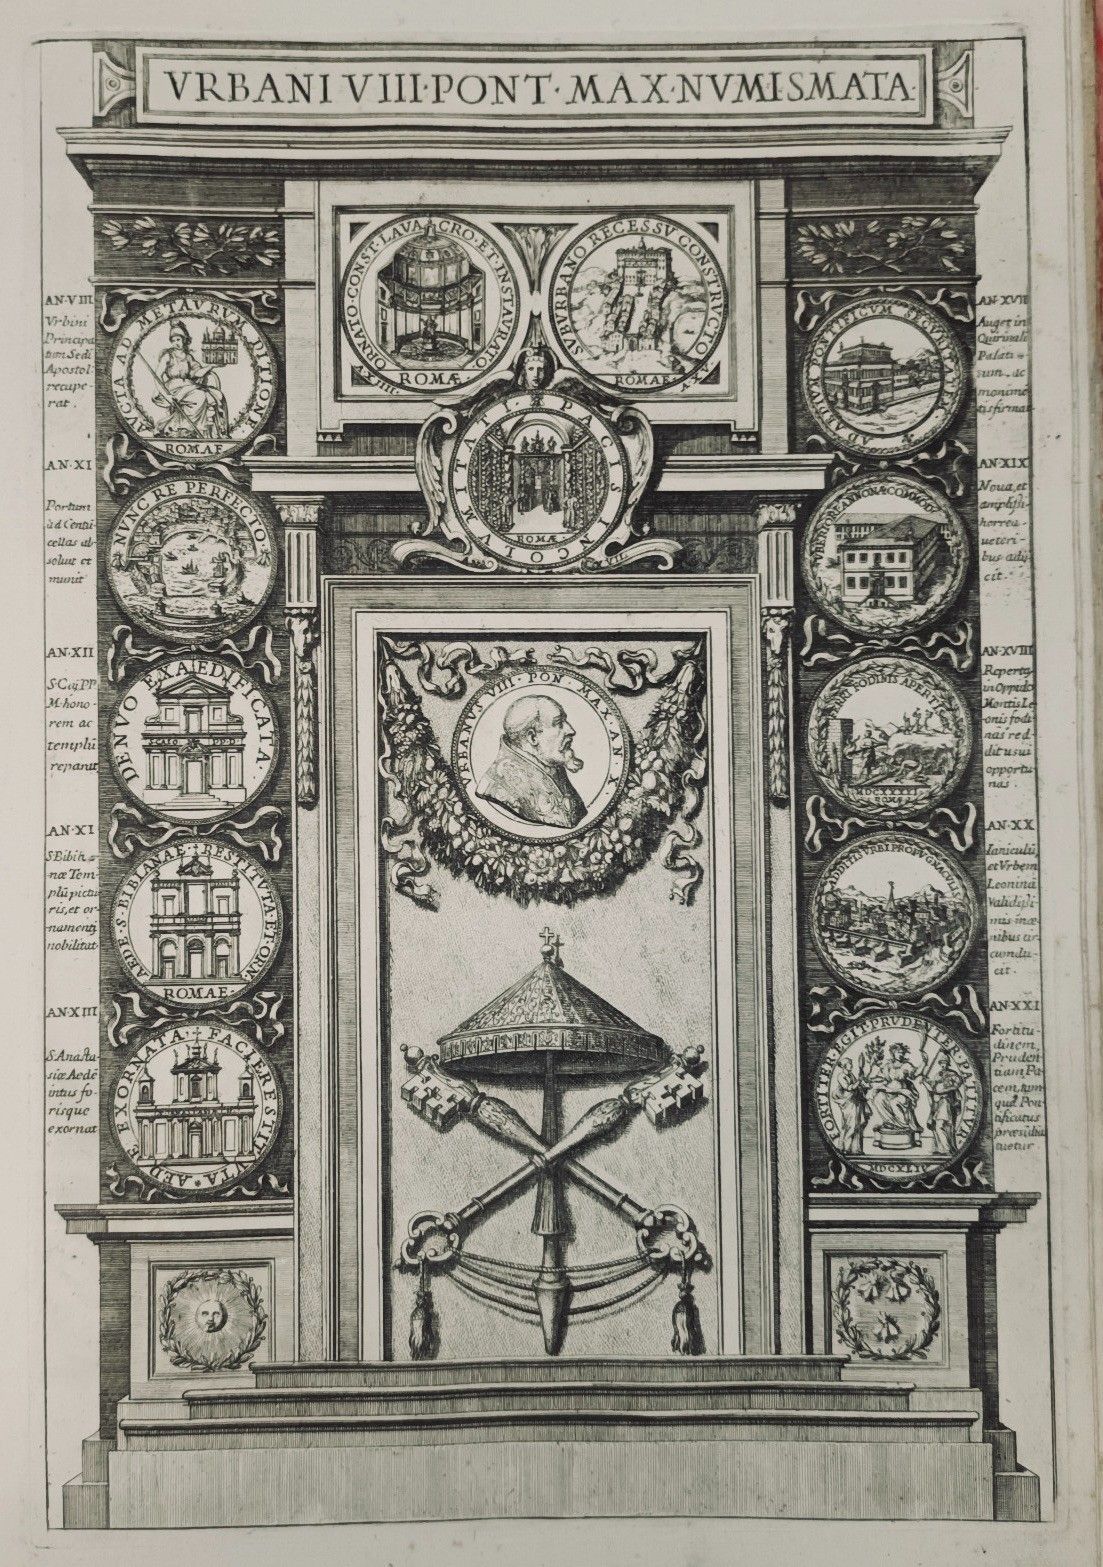 Null 数理统计学--《罗马数字》（Nummi Familiarum Romanarum）...
Amstelaedamis, Gallet, 约1670年。&hellip;